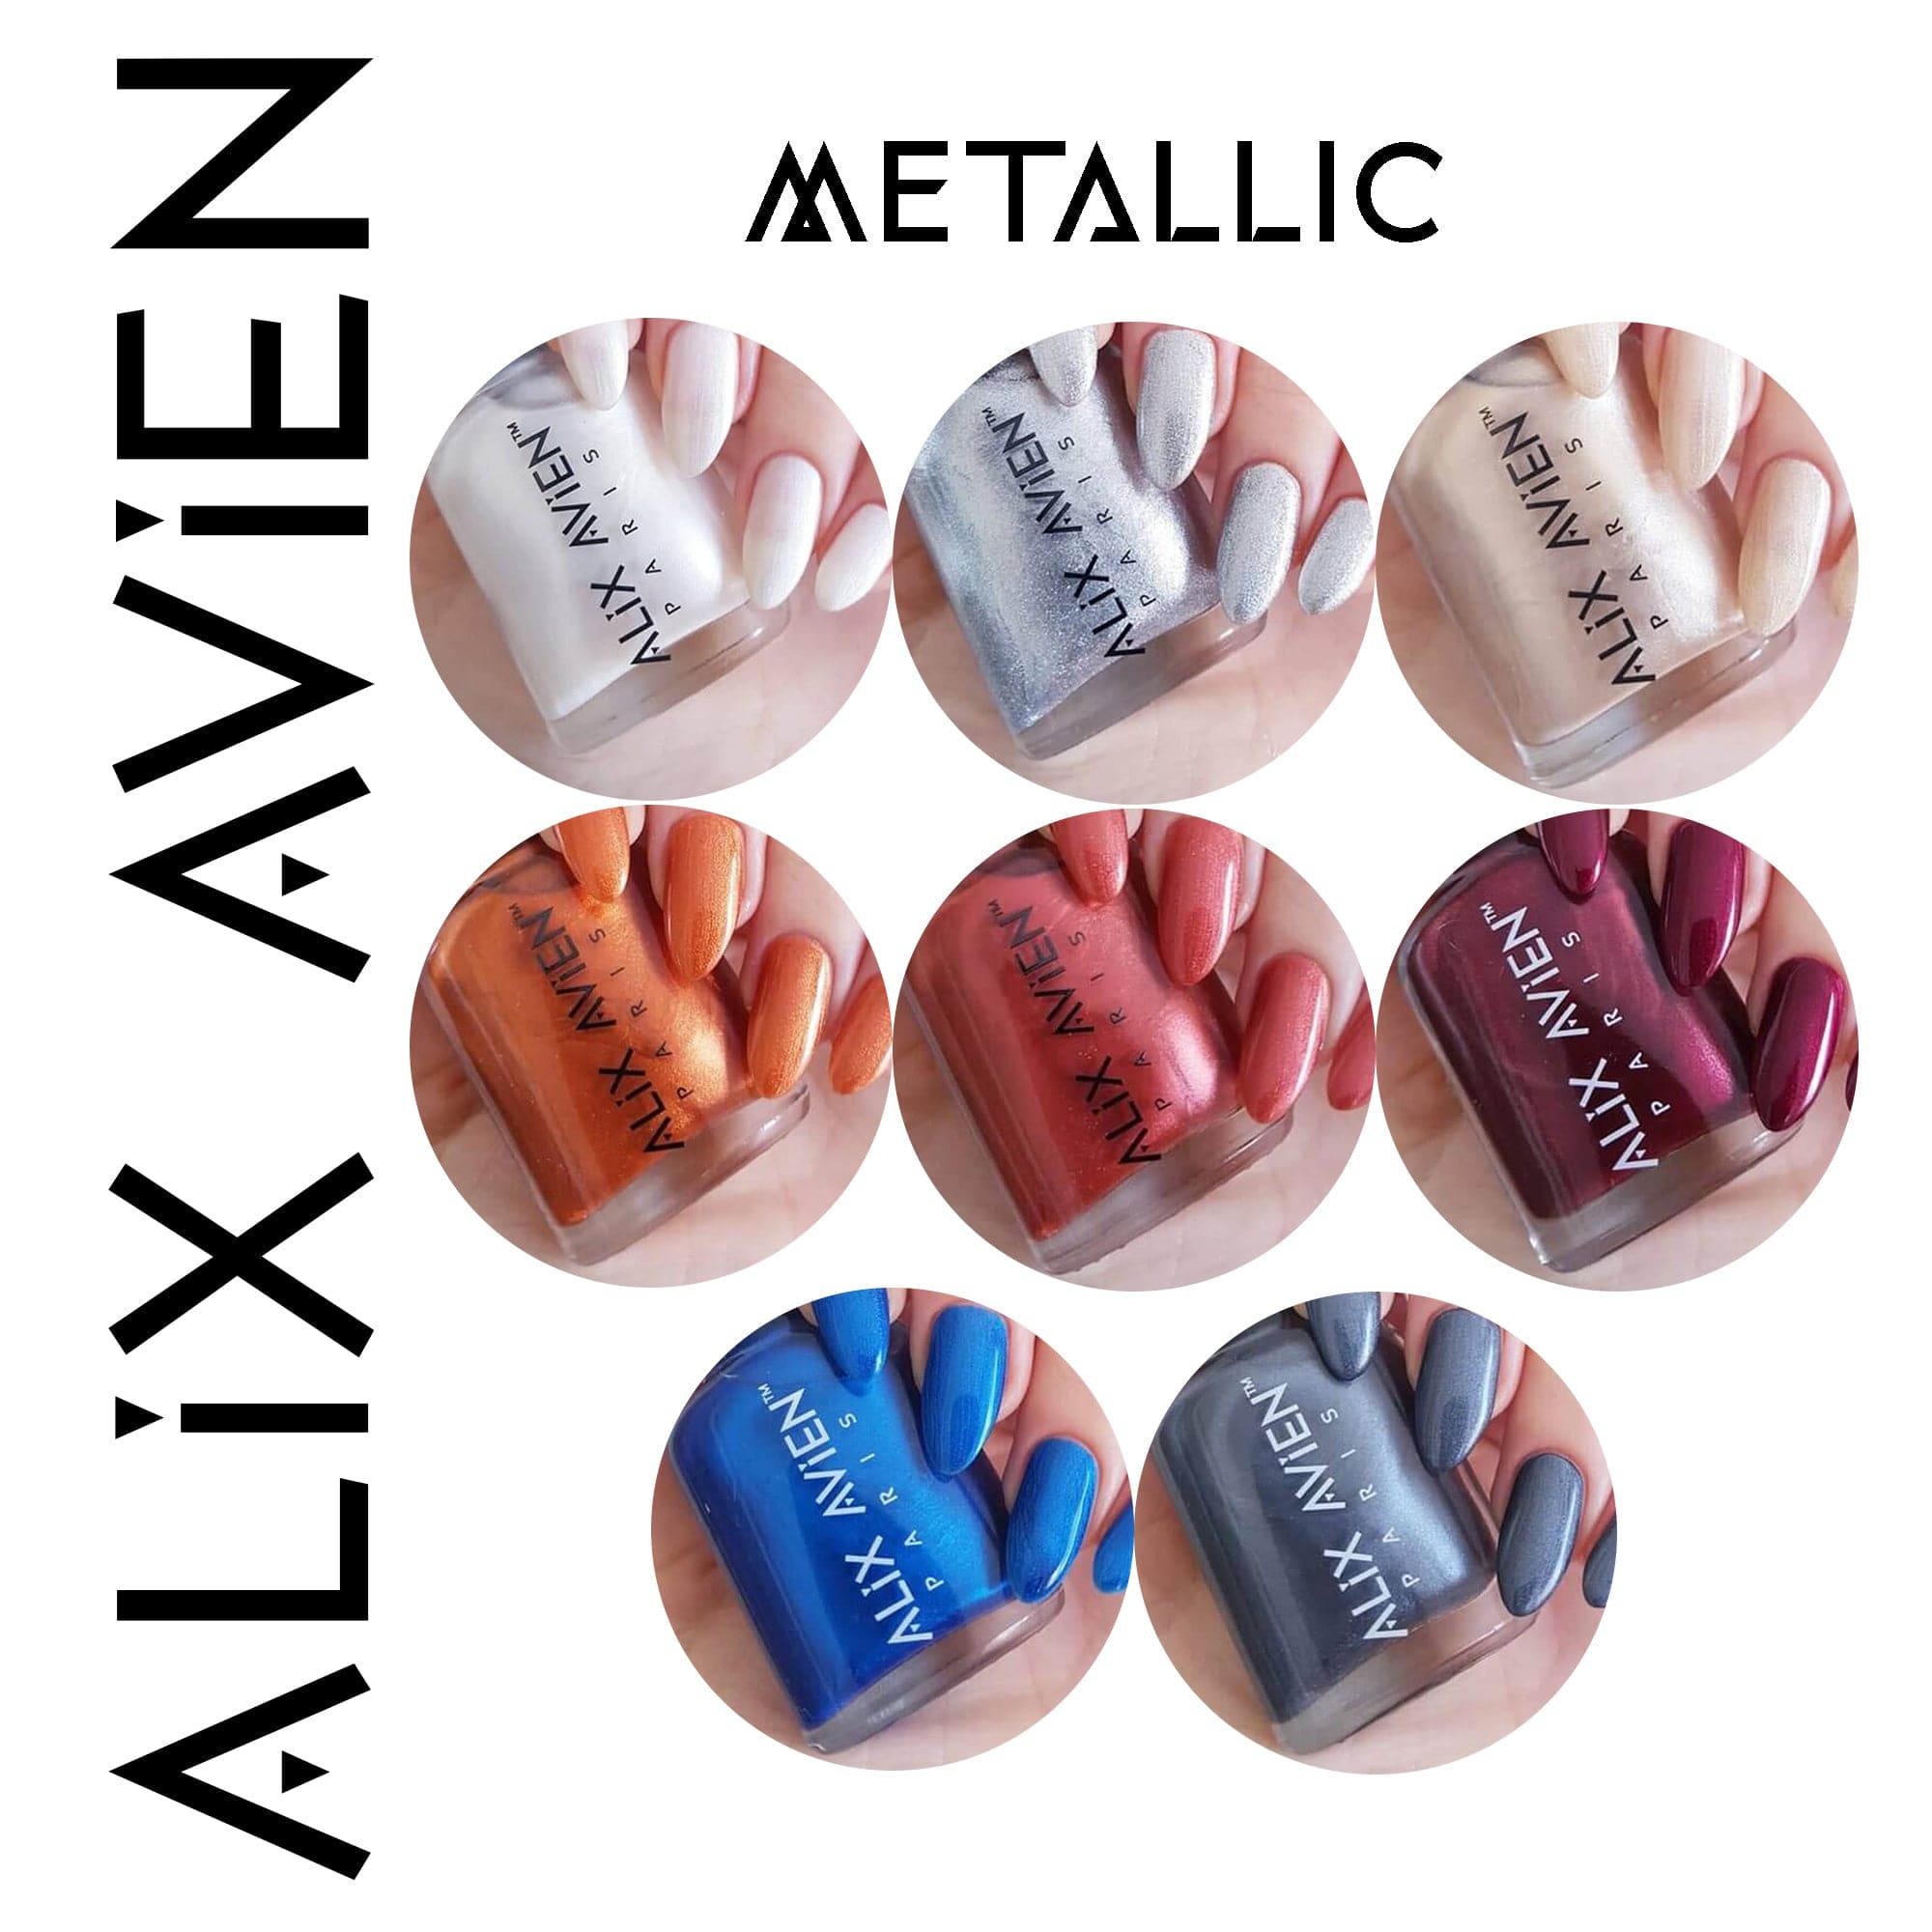 Alix Avien - Nail Polish No.34 (Electric Blue) - Eson Direct